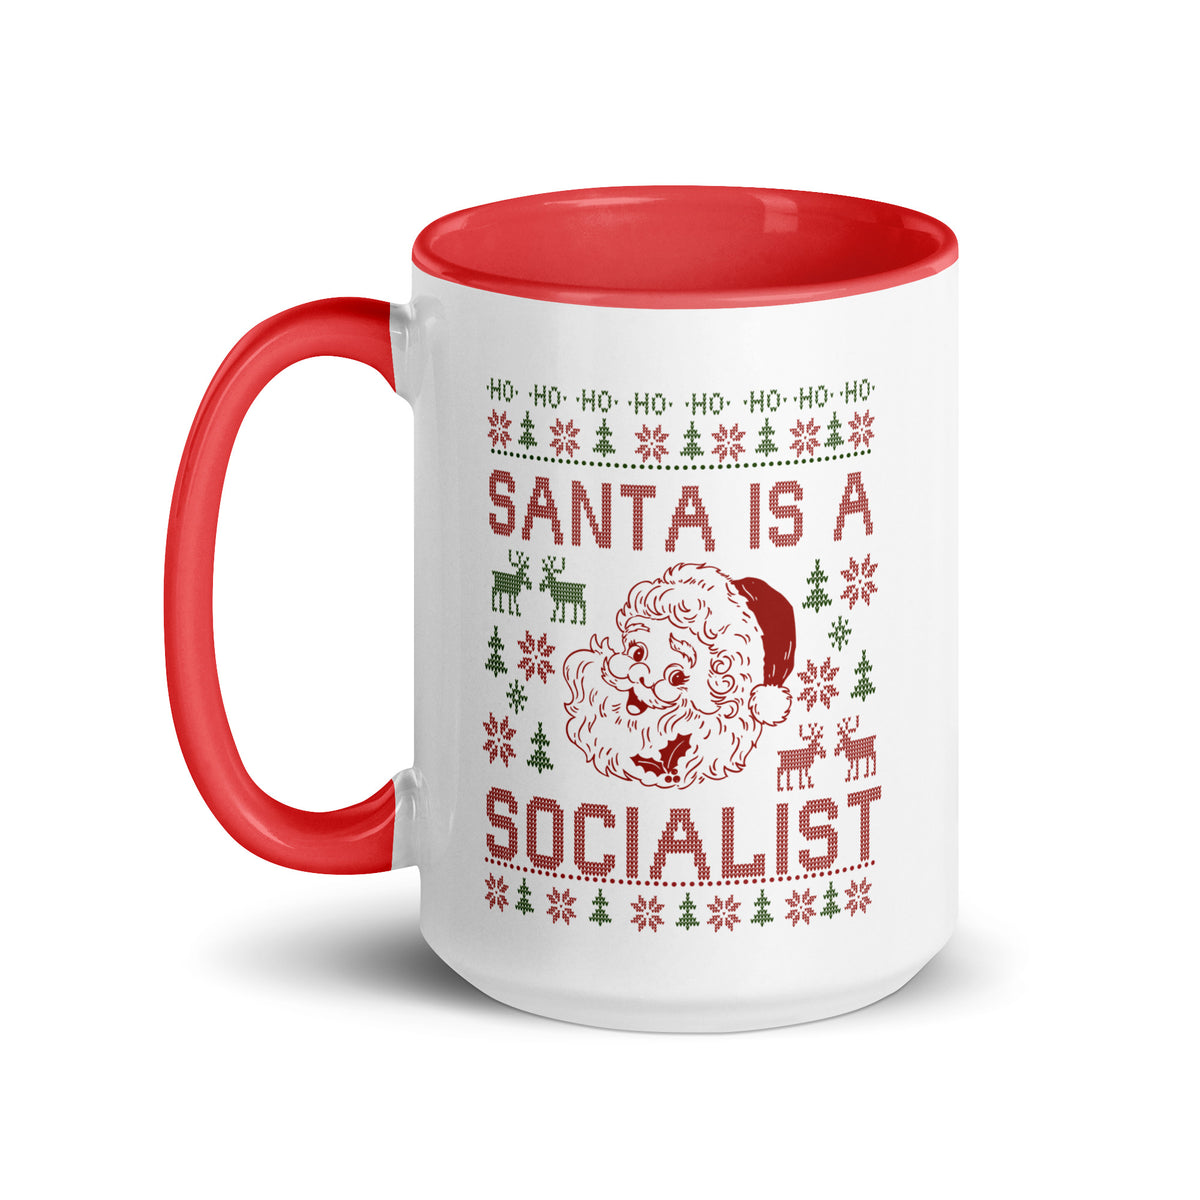 Santa is a Socialist Mug